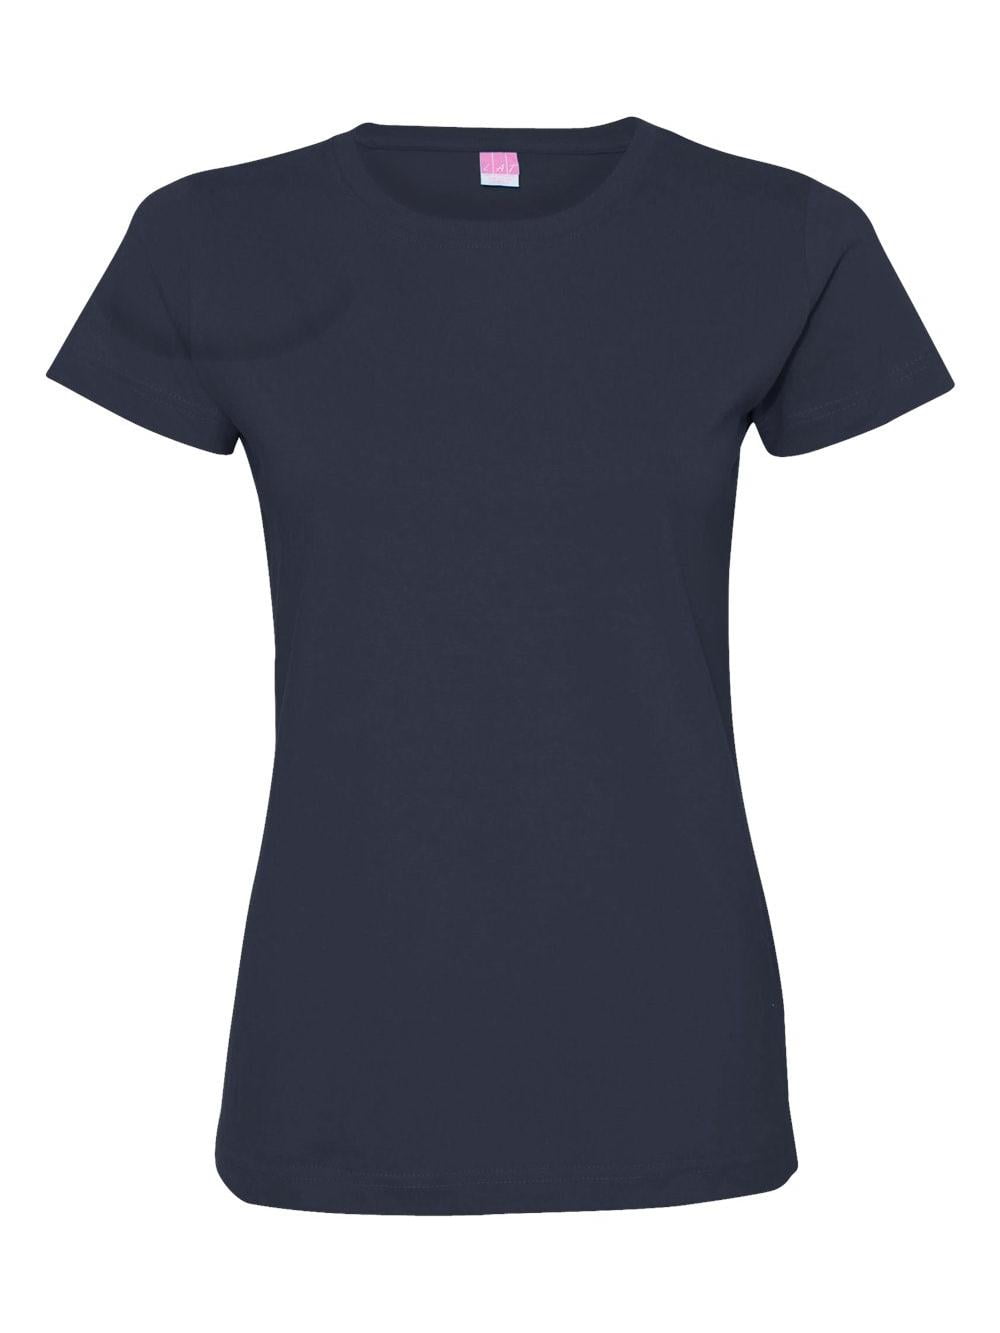 Lat - LAT T-Shirts Women's Fine Jersey Tee - Walmart.com